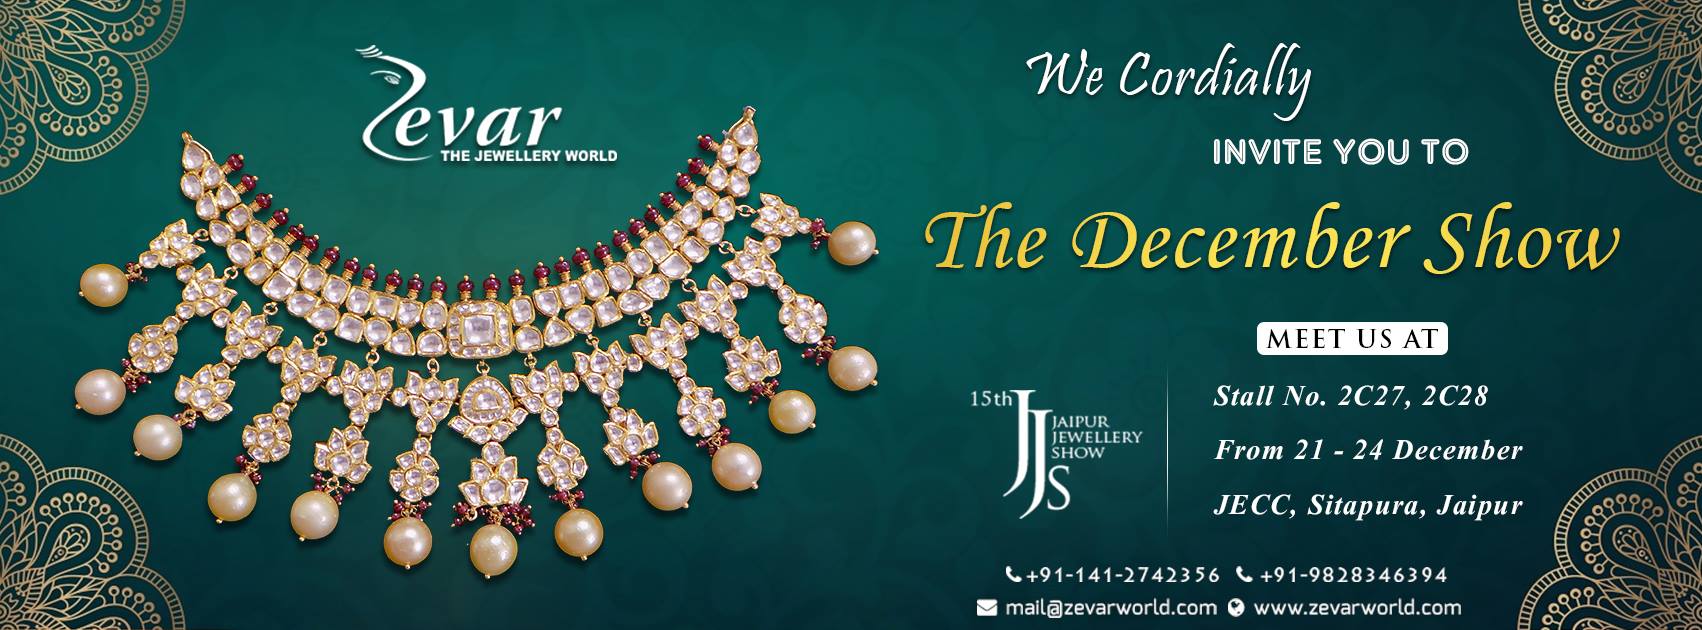 Jaipur Jewellery Show - Zevar The Jewellery World, Jaipur, Rajasthan, India